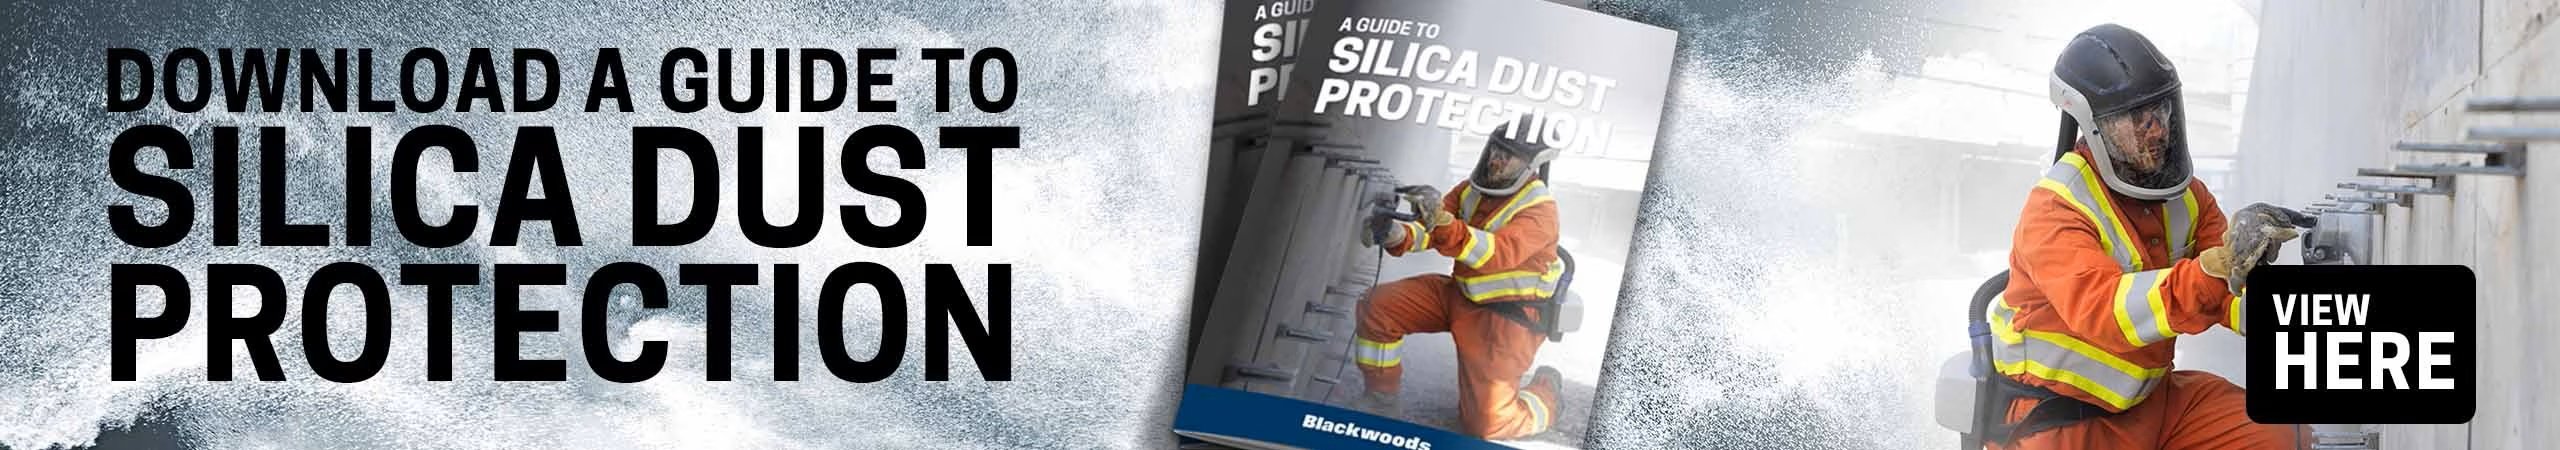 silica dust brochure-2560x450